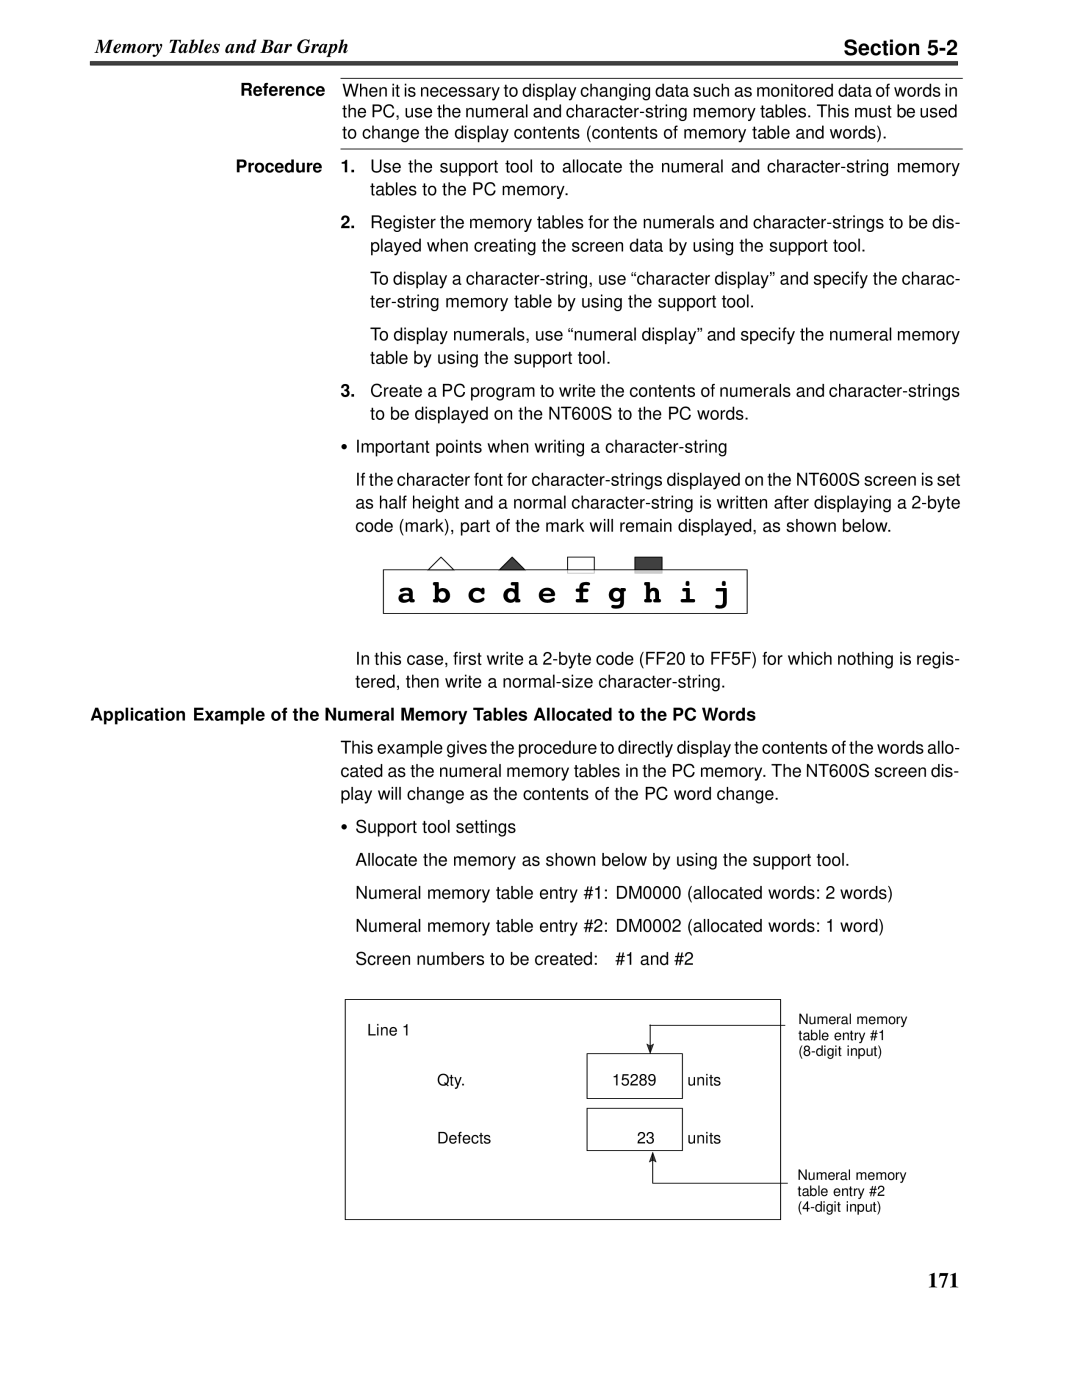 Omron V022-E3-1 operation manual Section 